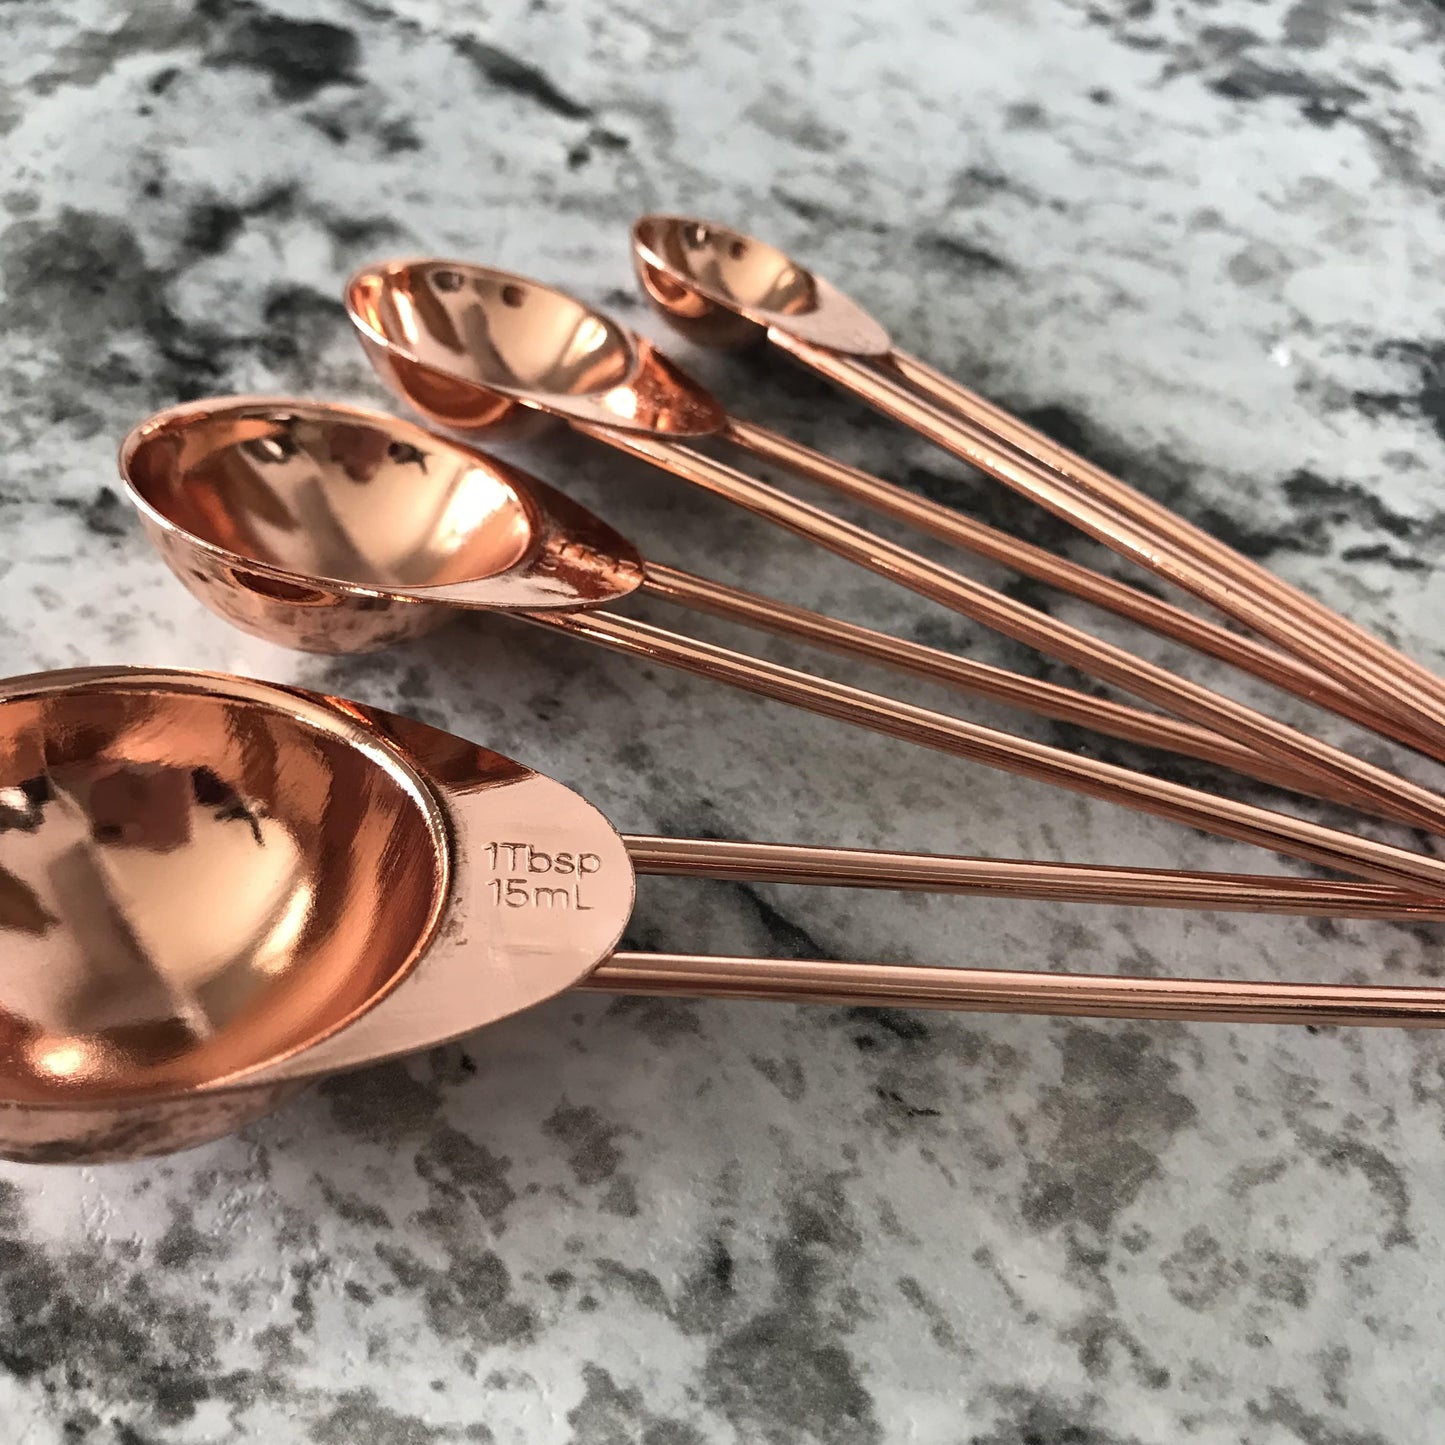 Baking Tool Rose Gold Stainless Steel Measuring Spoon 8-piece Set